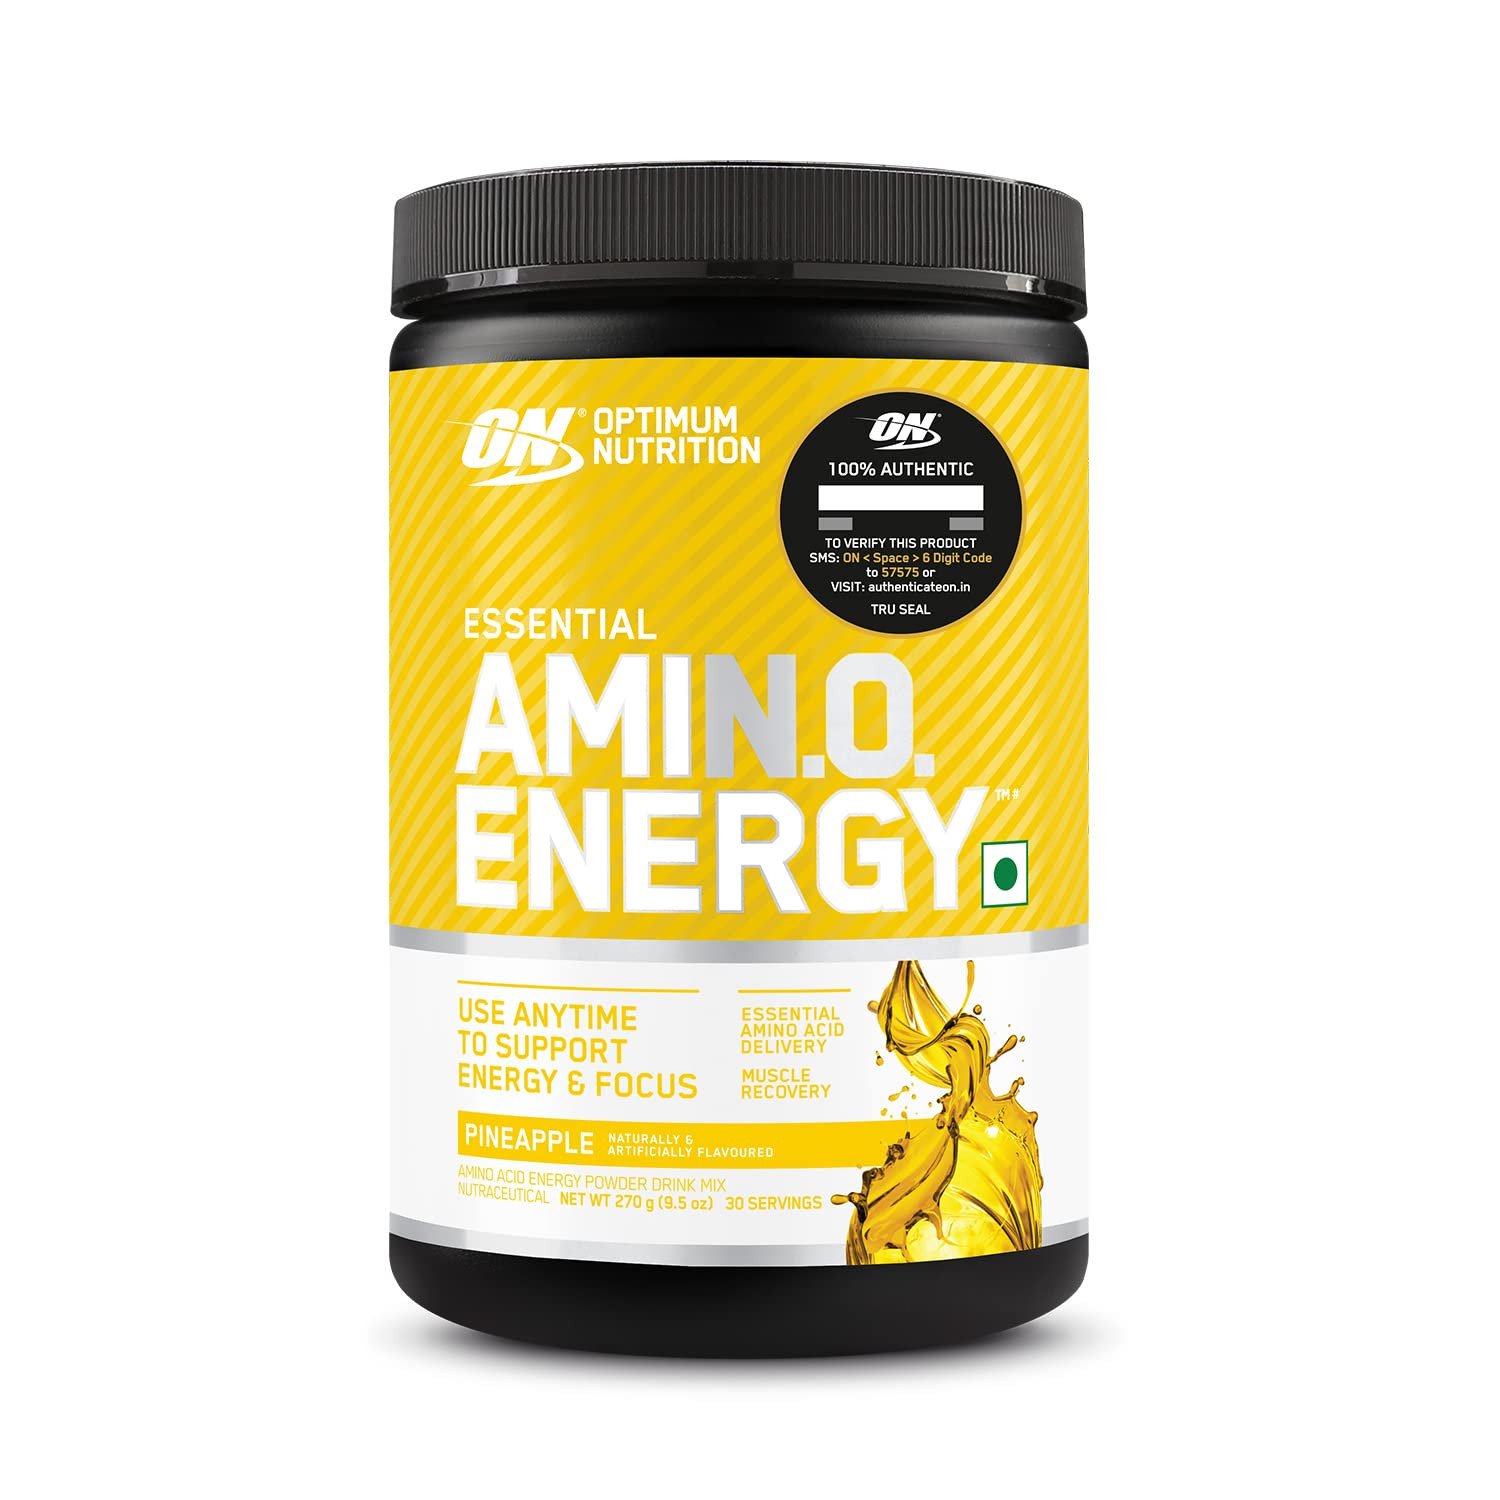 Optimum Nutrition Amino Energy, Amino Acids, BCAA, Anytime Energy Formula, Supports Energy & Focus, 270gm Pineapple (30 serves)